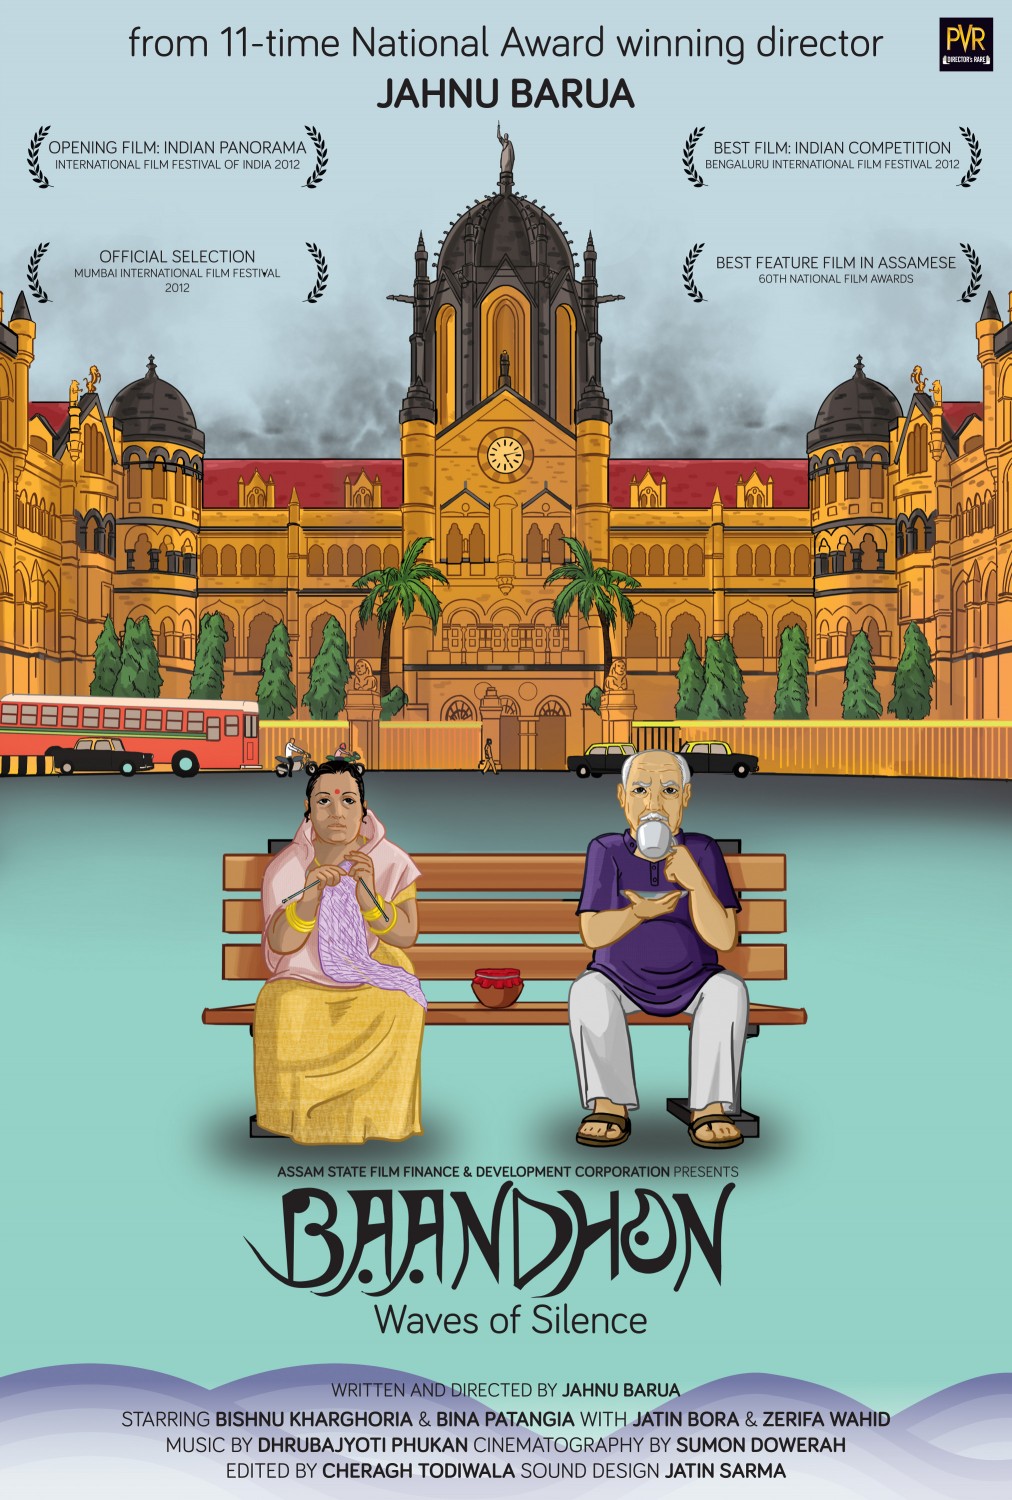 Extra Large Movie Poster Image for Baandhon 